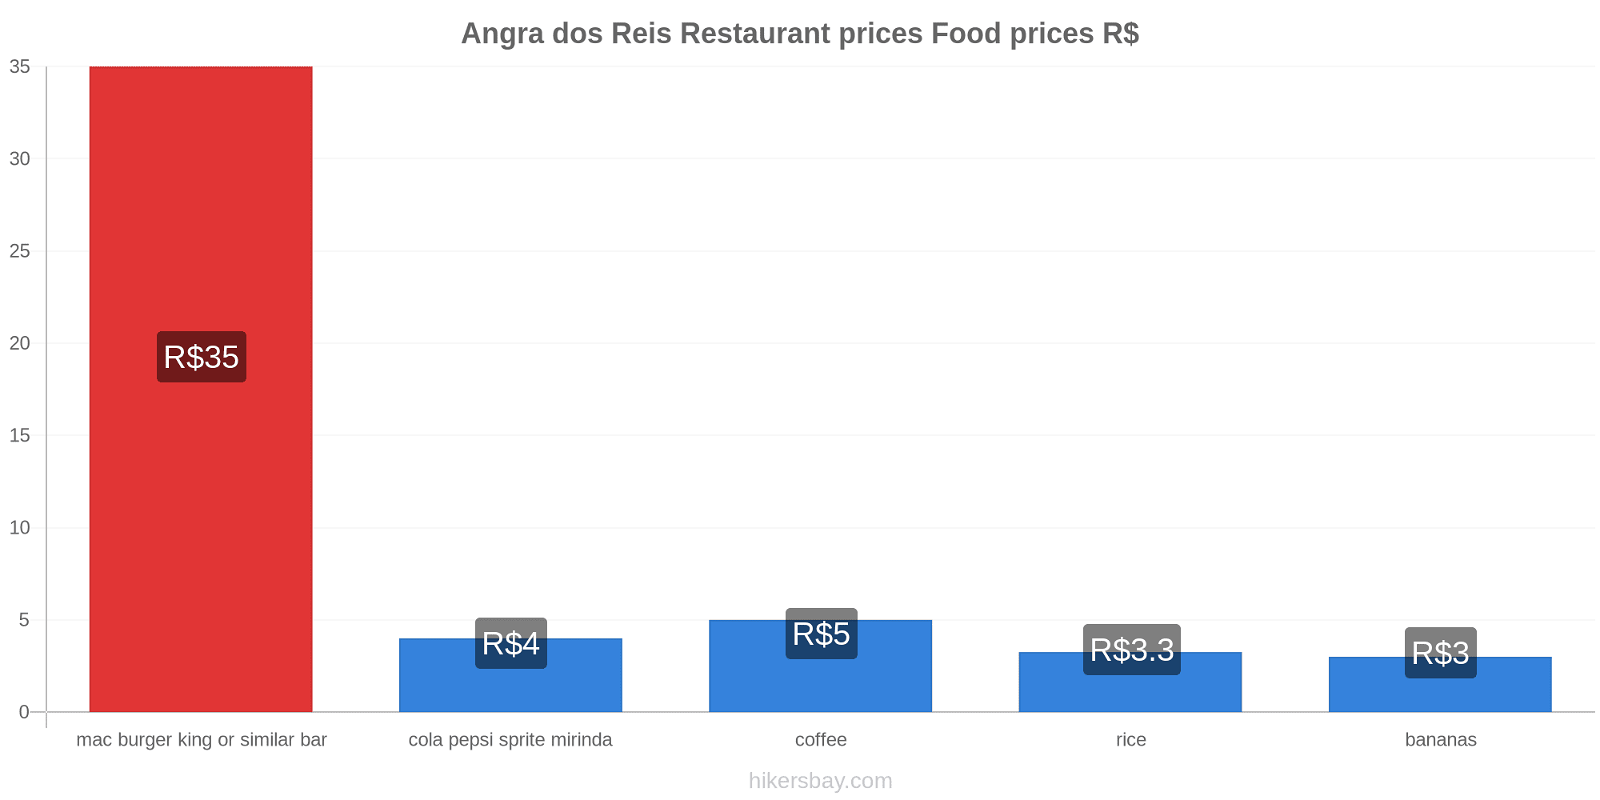 Angra dos Reis price changes hikersbay.com